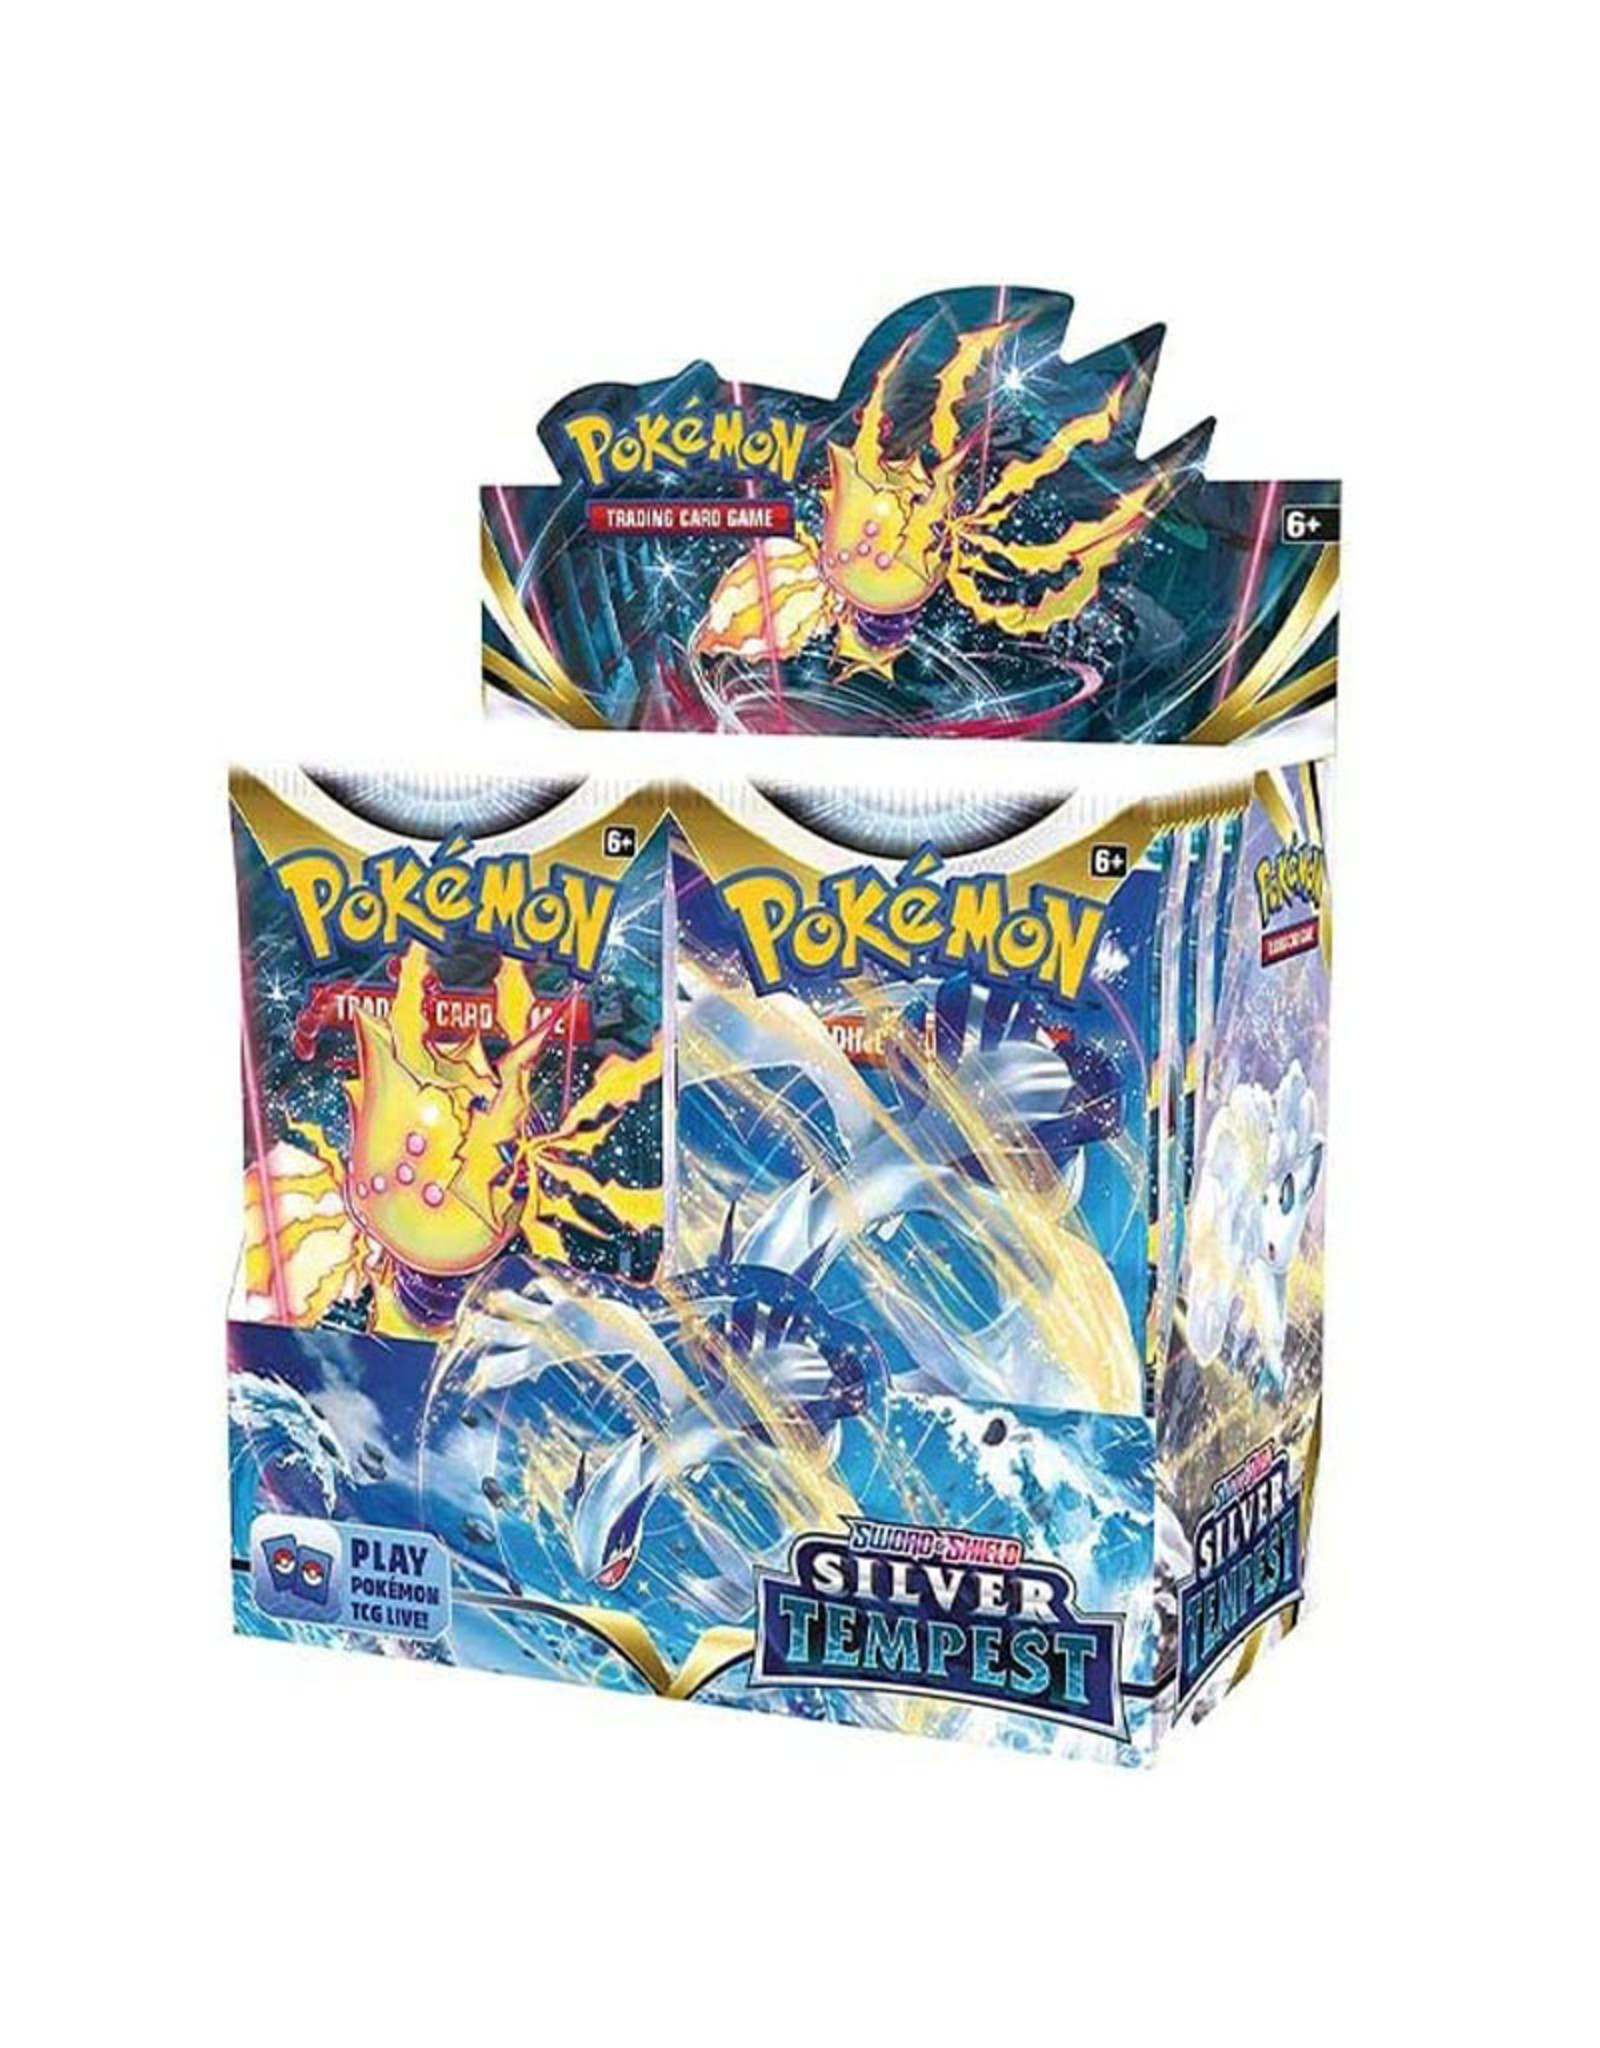 Pokemon Pokemon Silver Tempest Booster Box